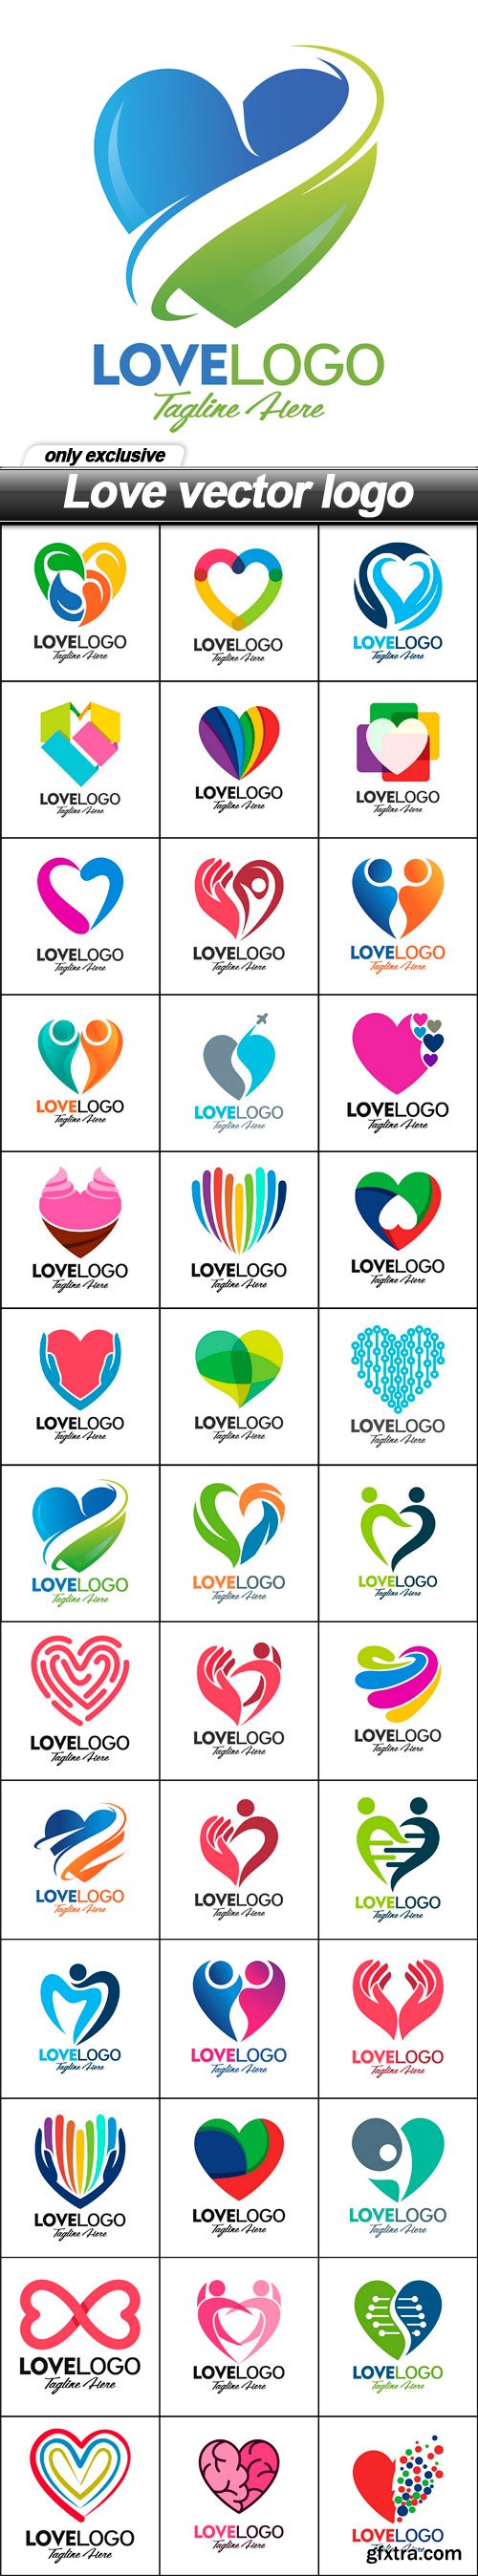 Love vector logo - 39 EPS